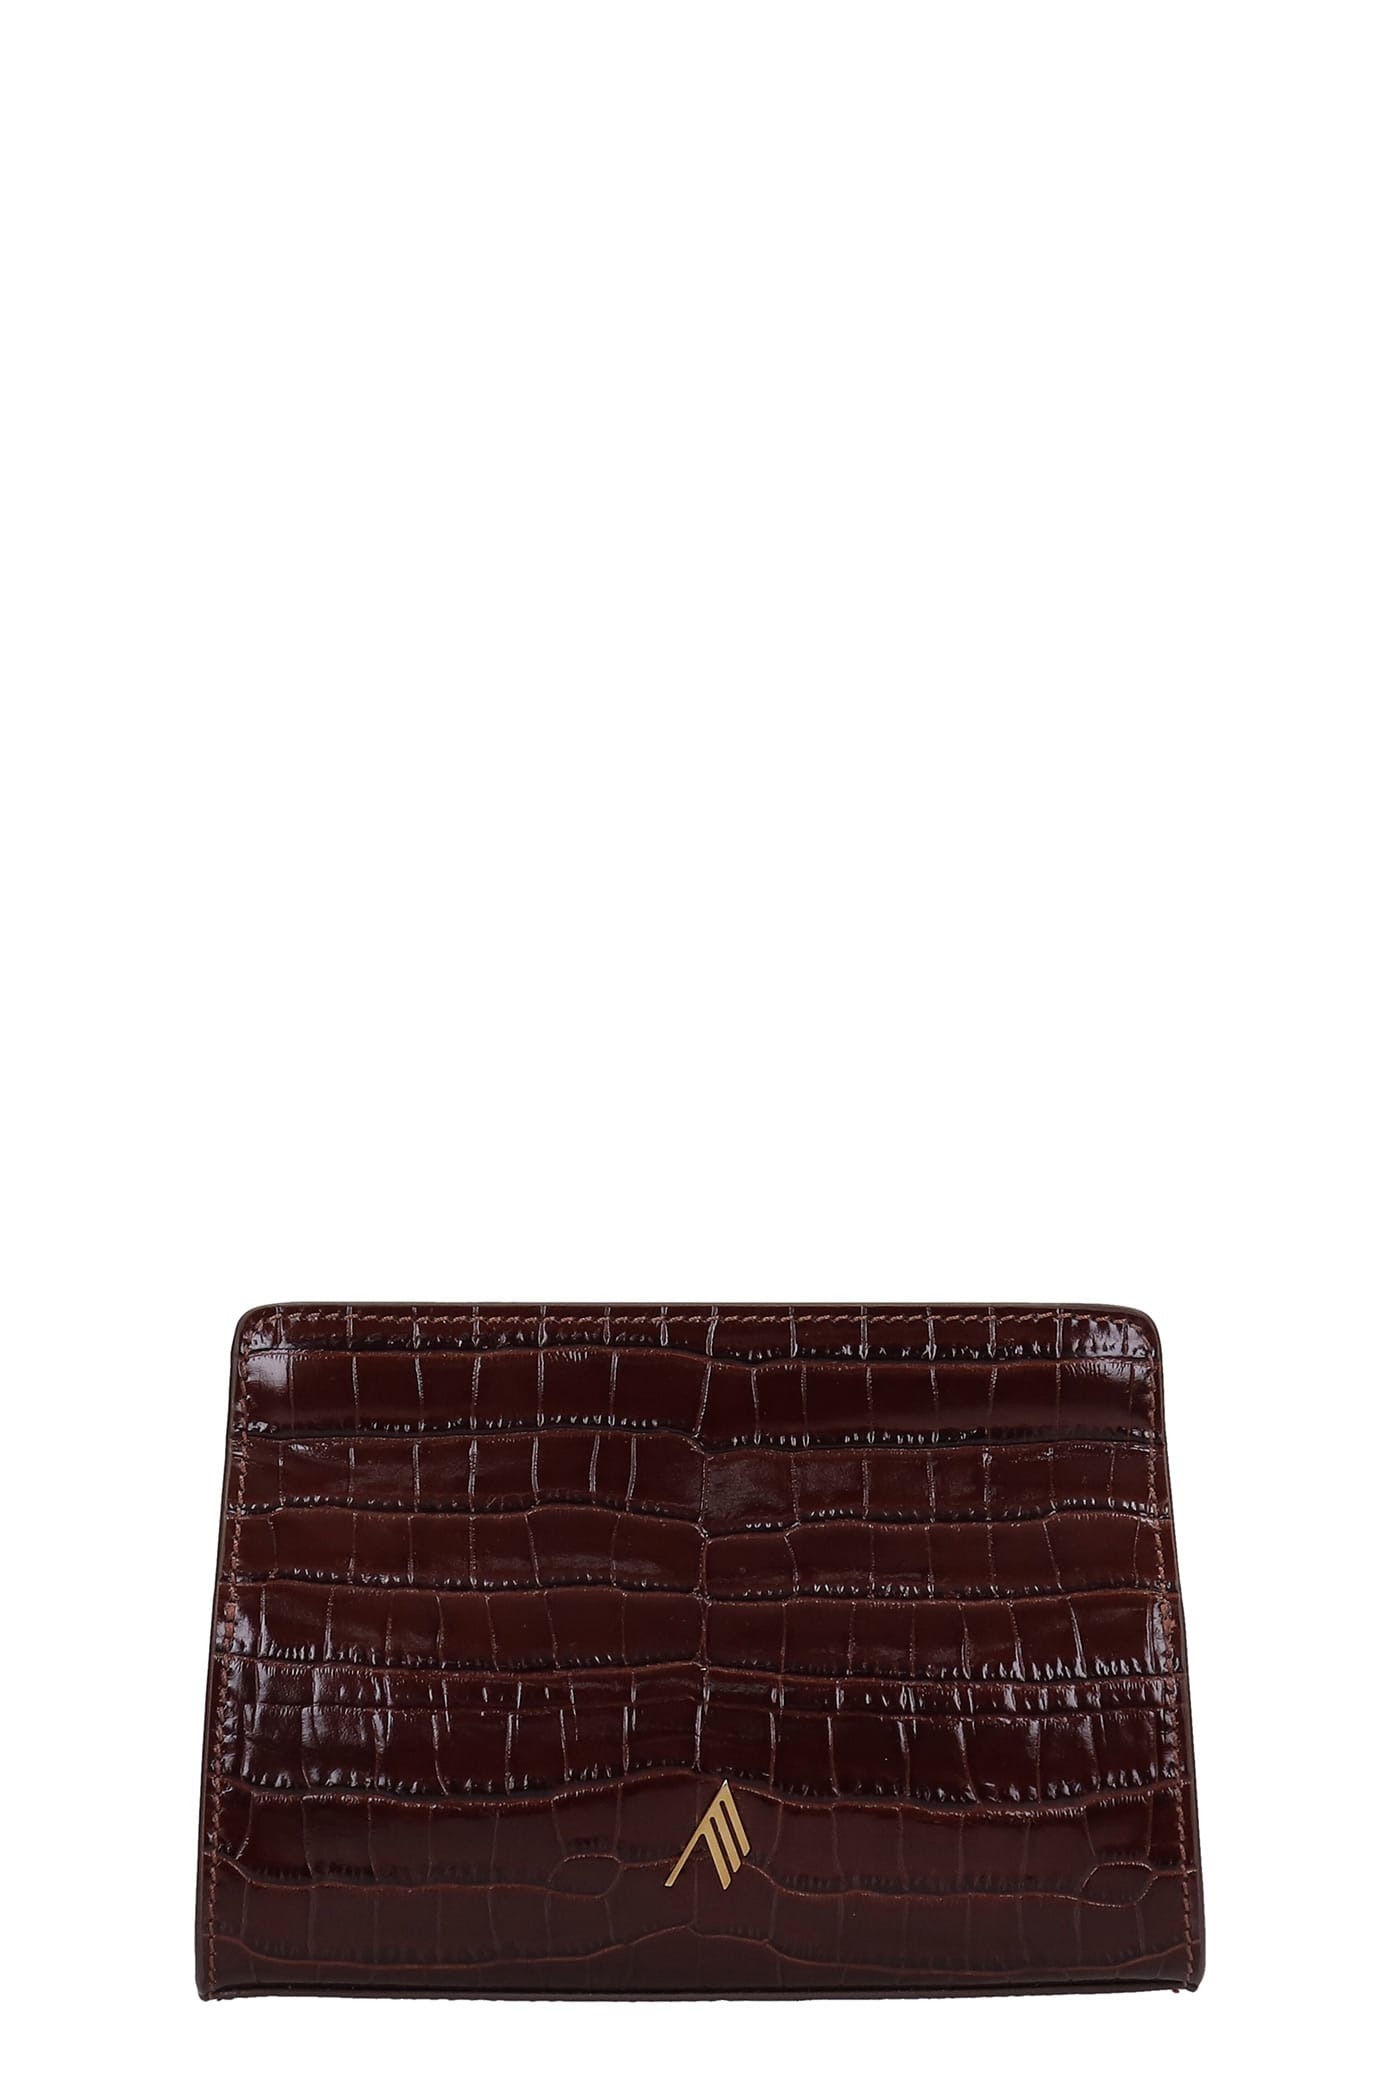 The Attico Clutch In Brown Leather